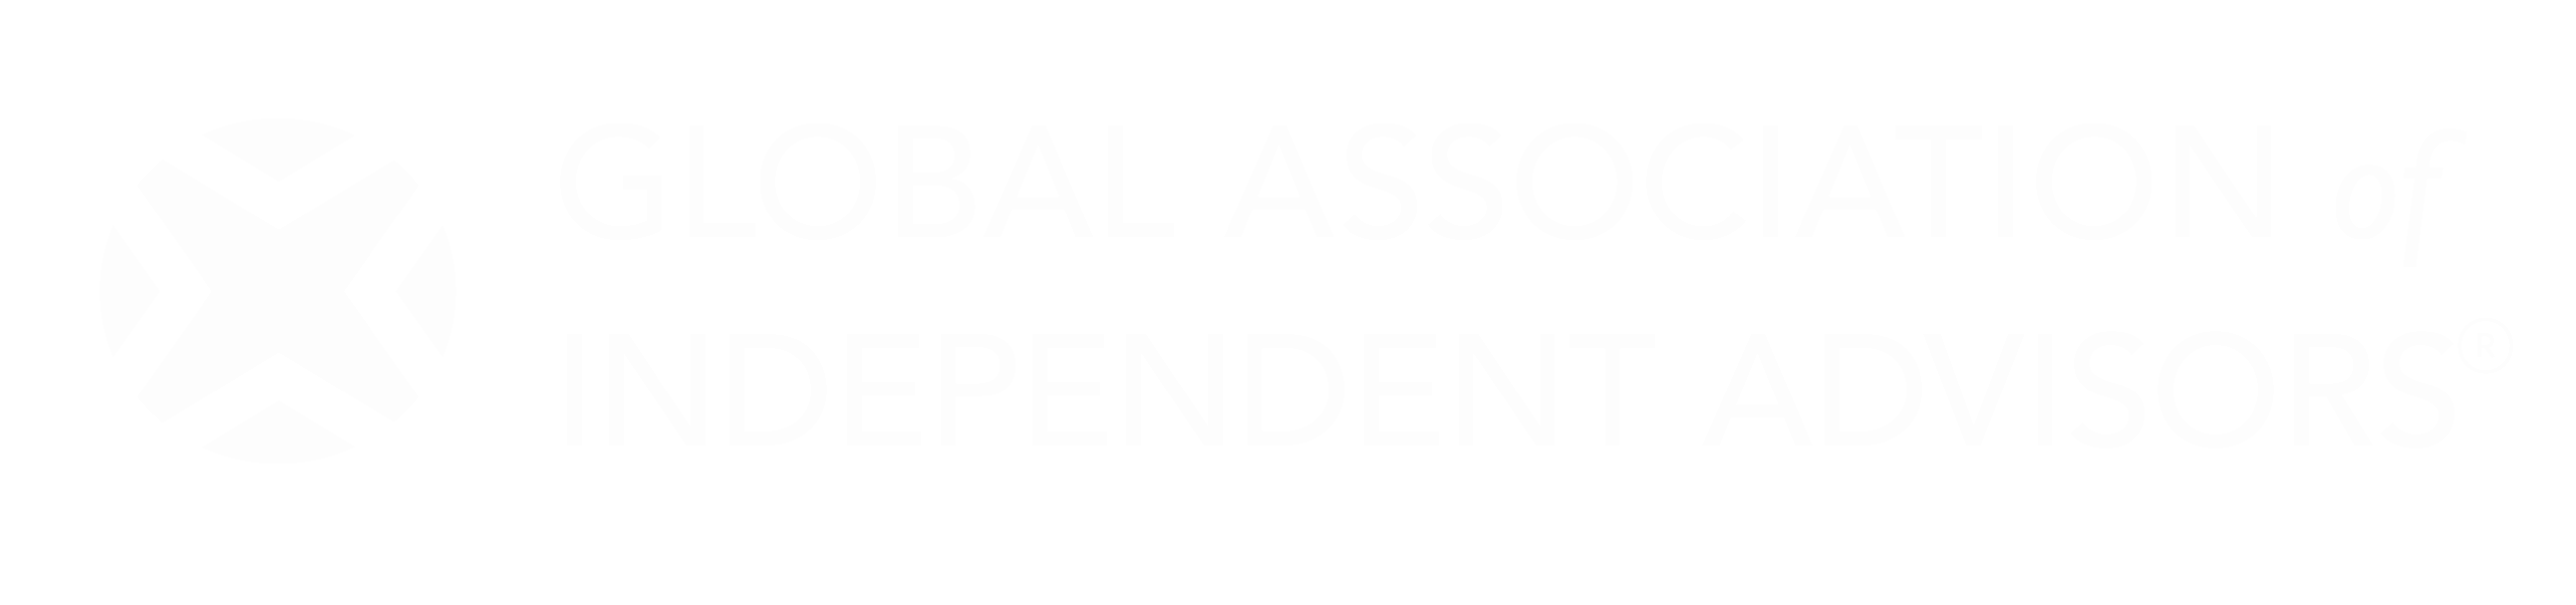 Global Association of Independent Advisors